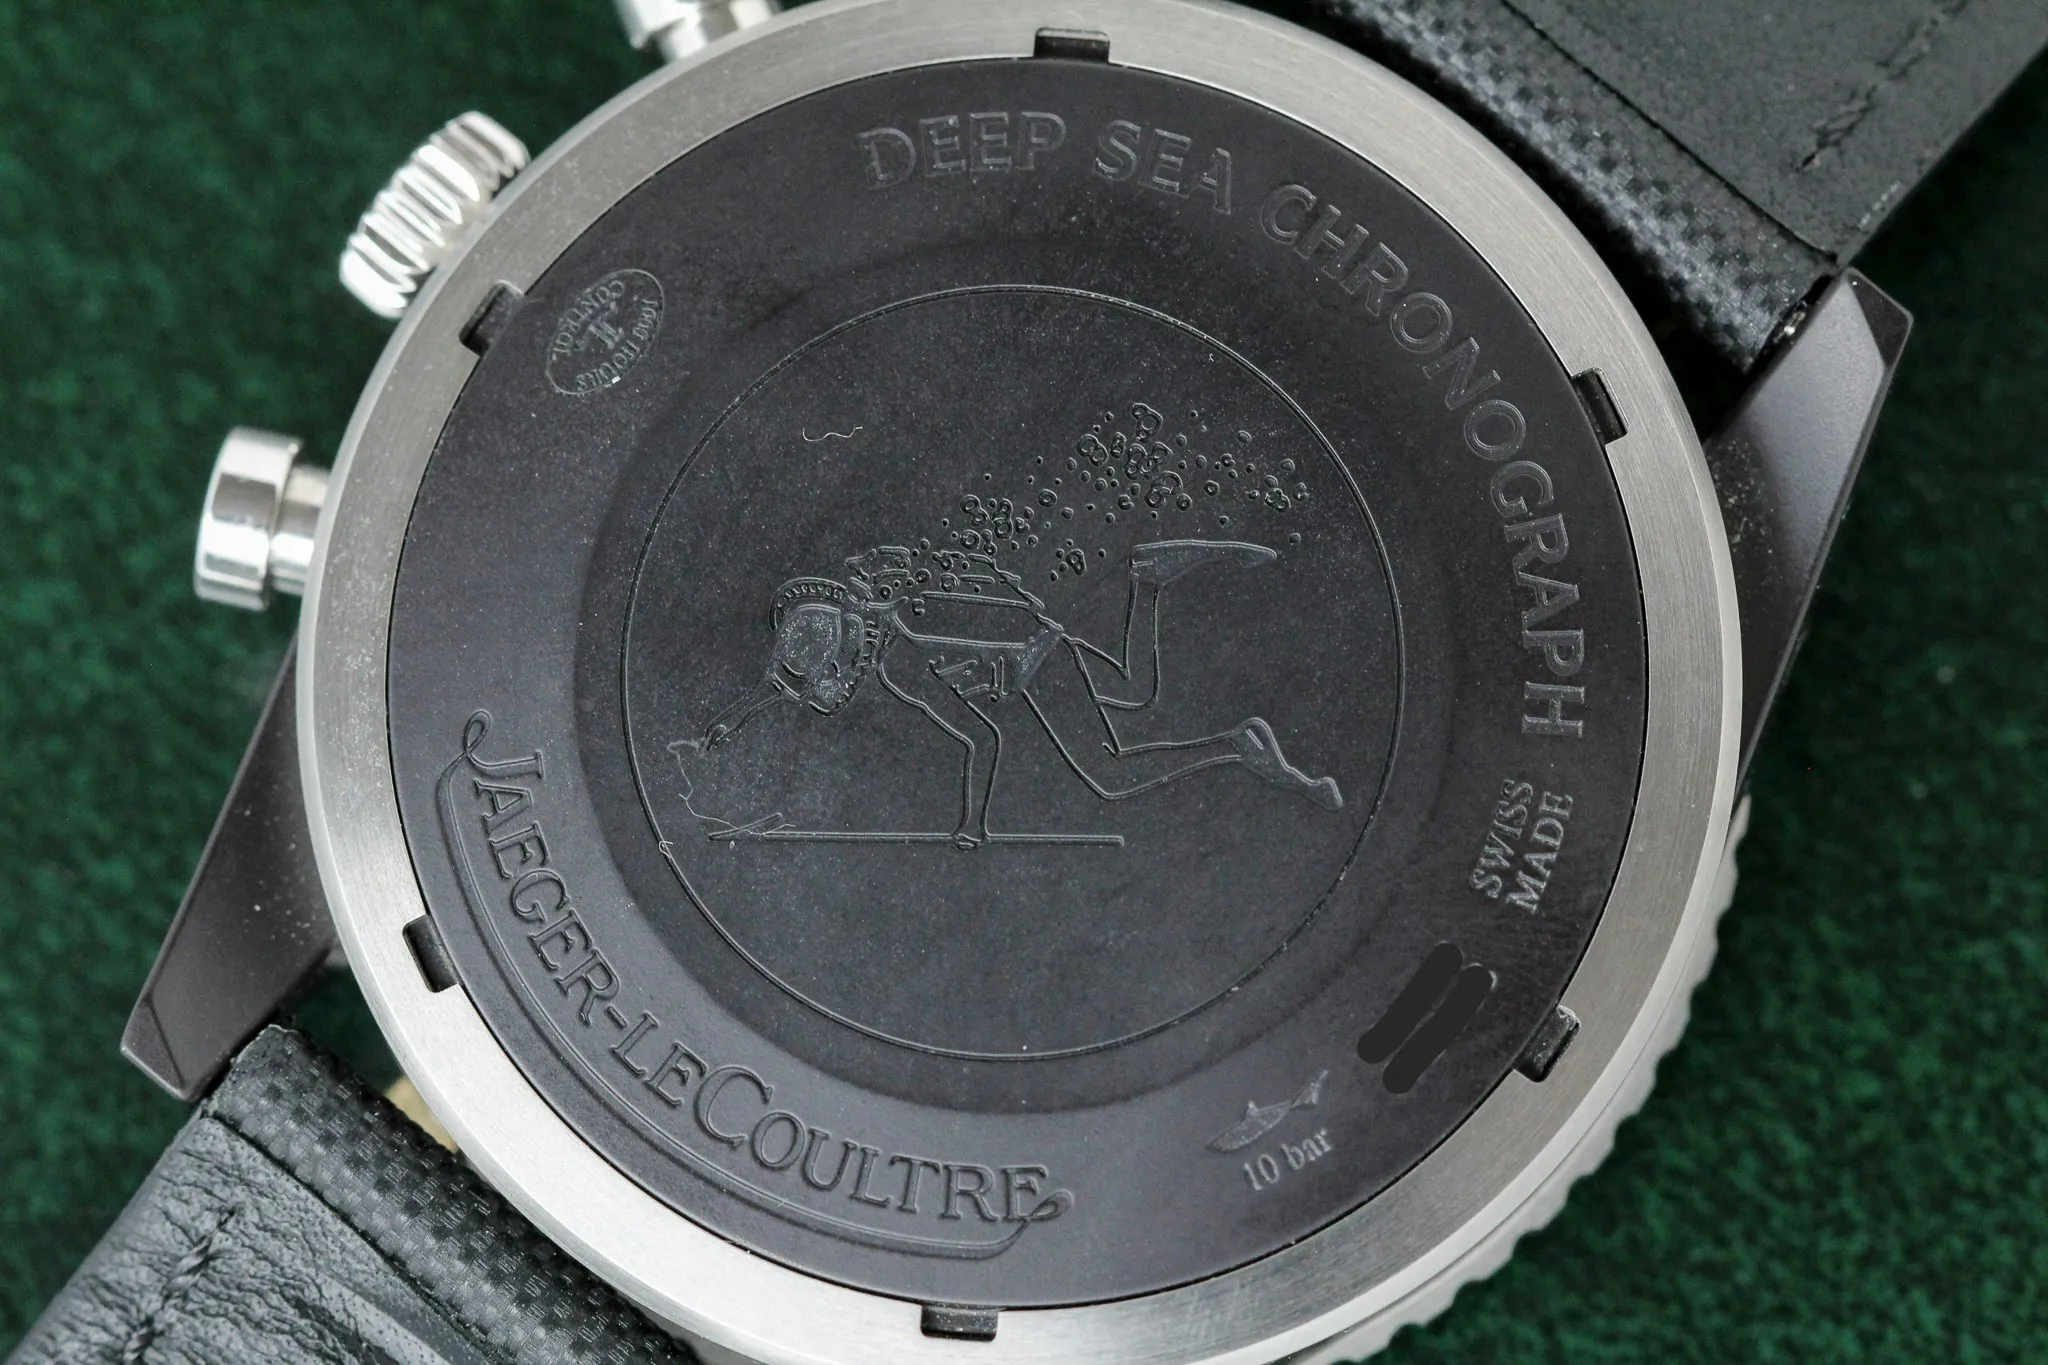 Jaeger-LeCoultre Deep Sea Chronograph Q208A570 44mm Titanium and ceramic Black 6